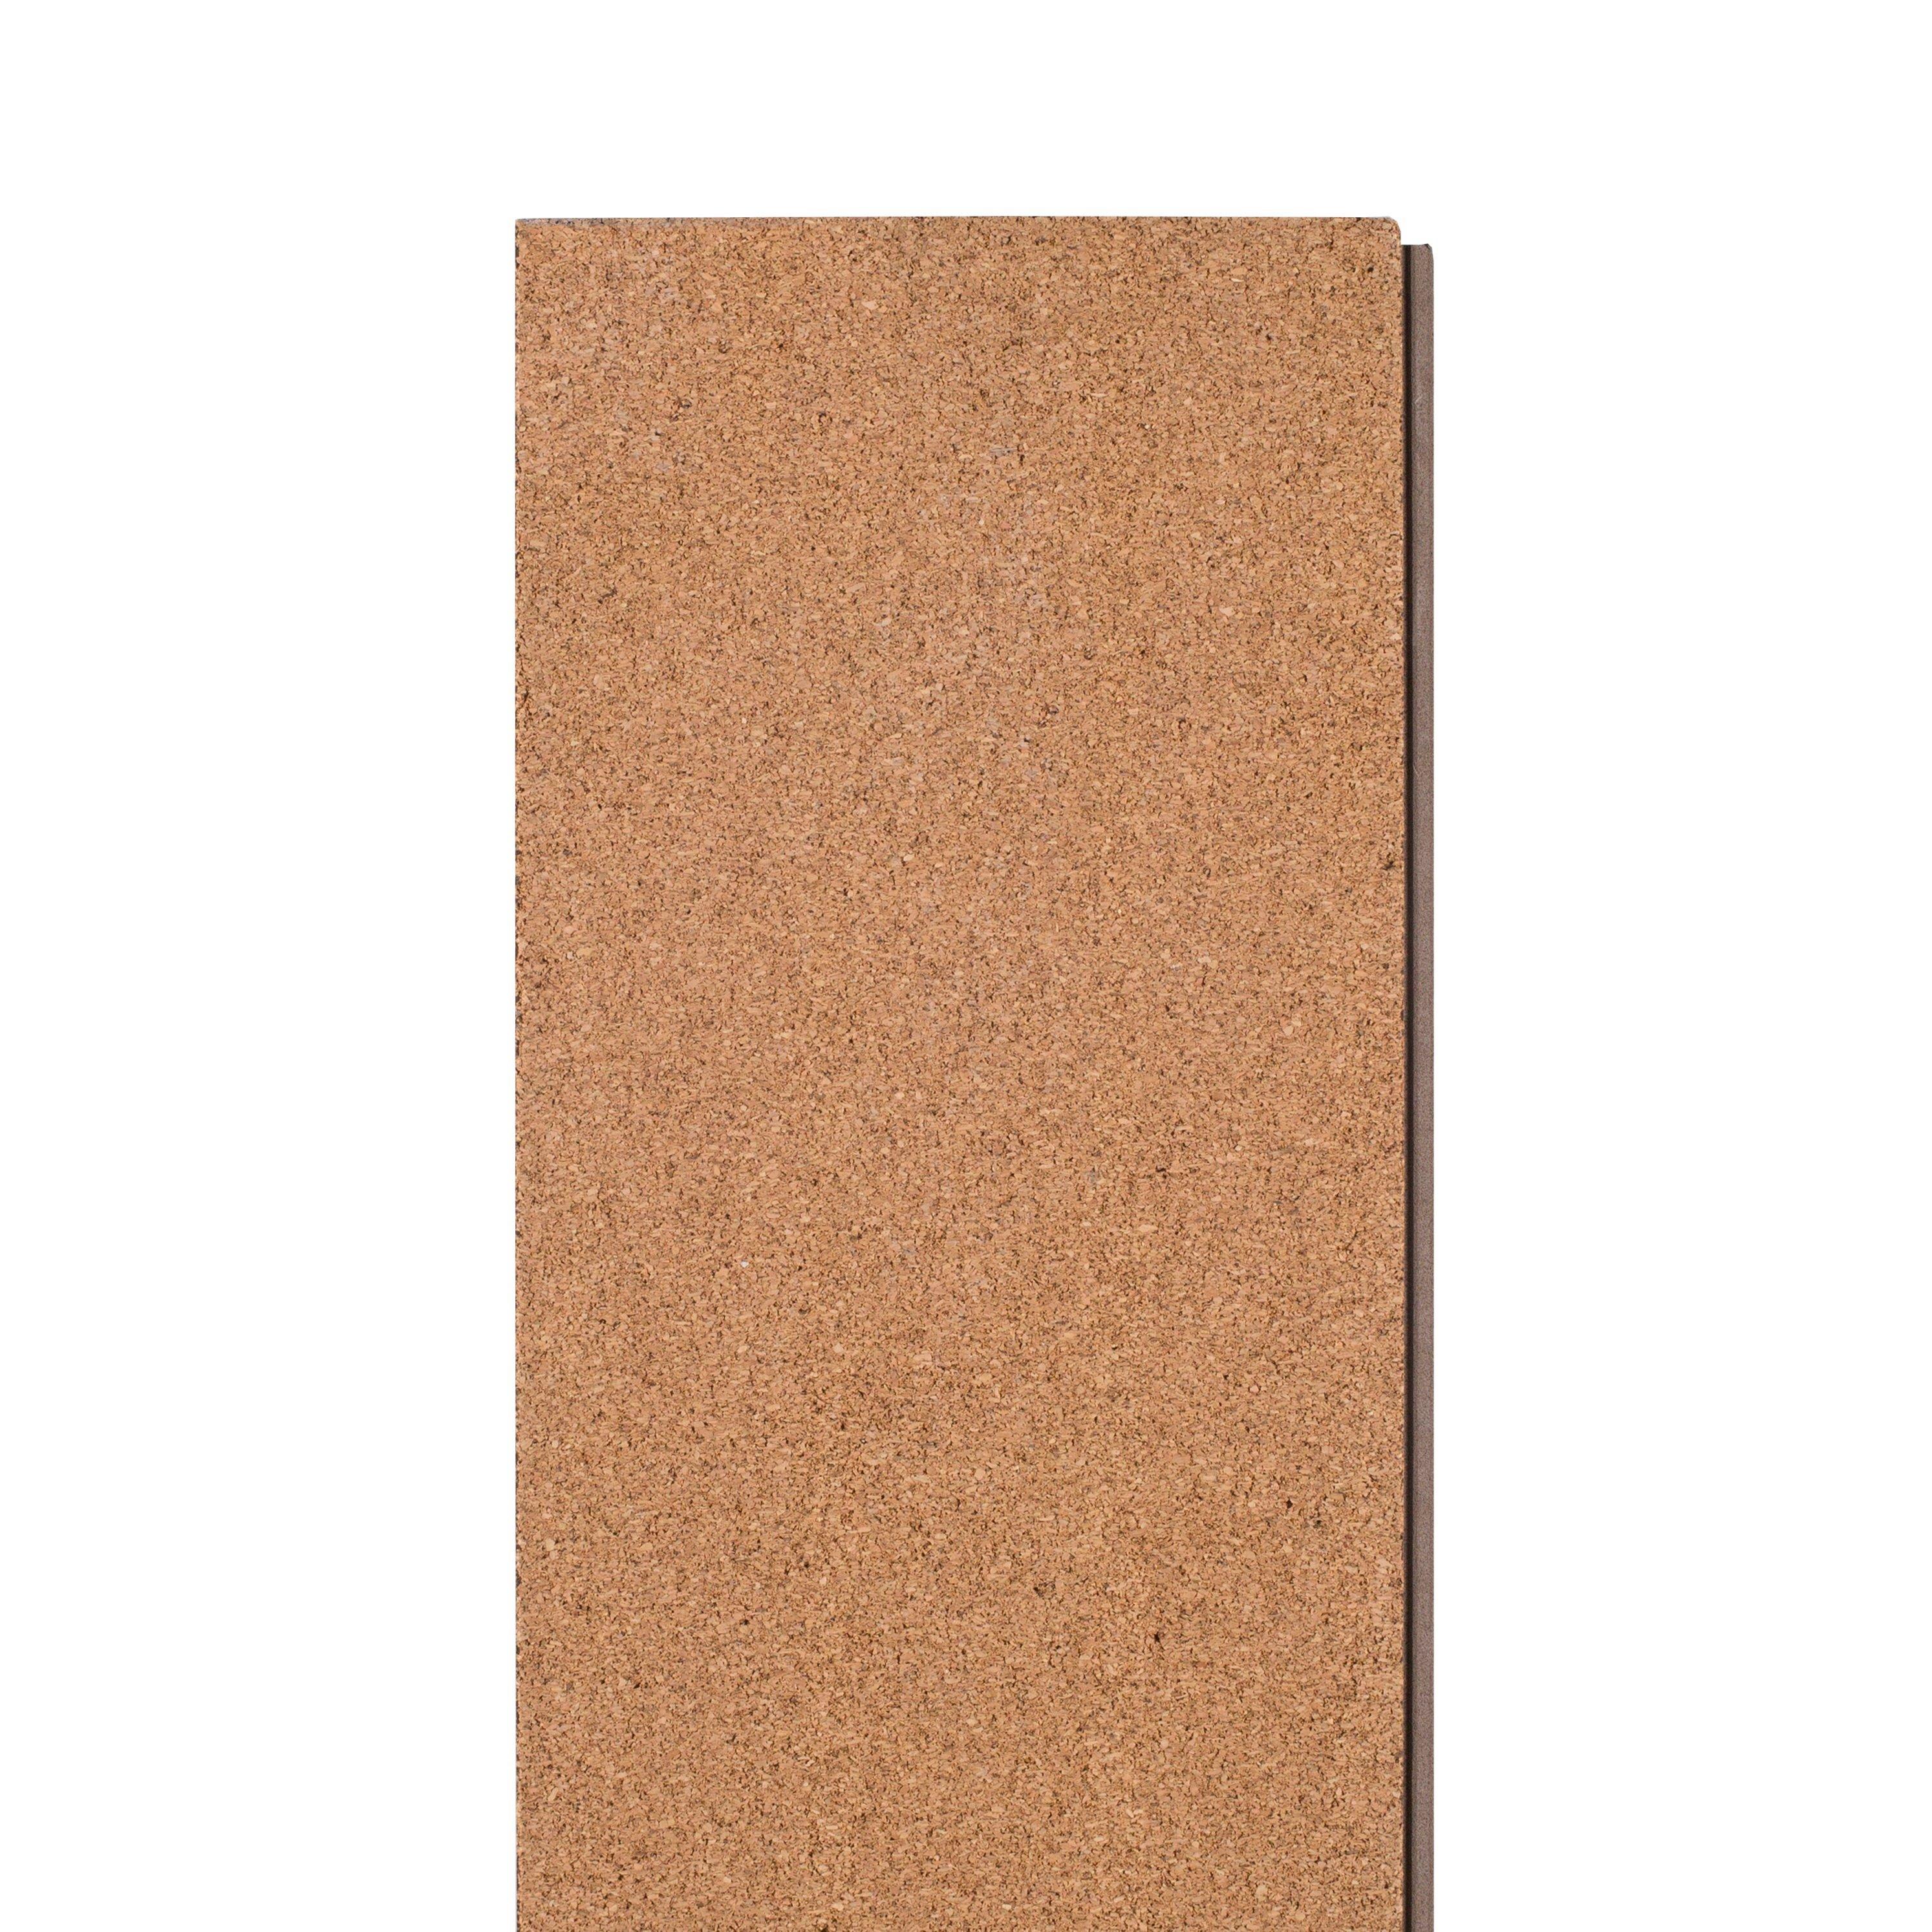 Torrione Rigid Core Luxury Vinyl Tile - Cork Back - 12 x 24 in ...